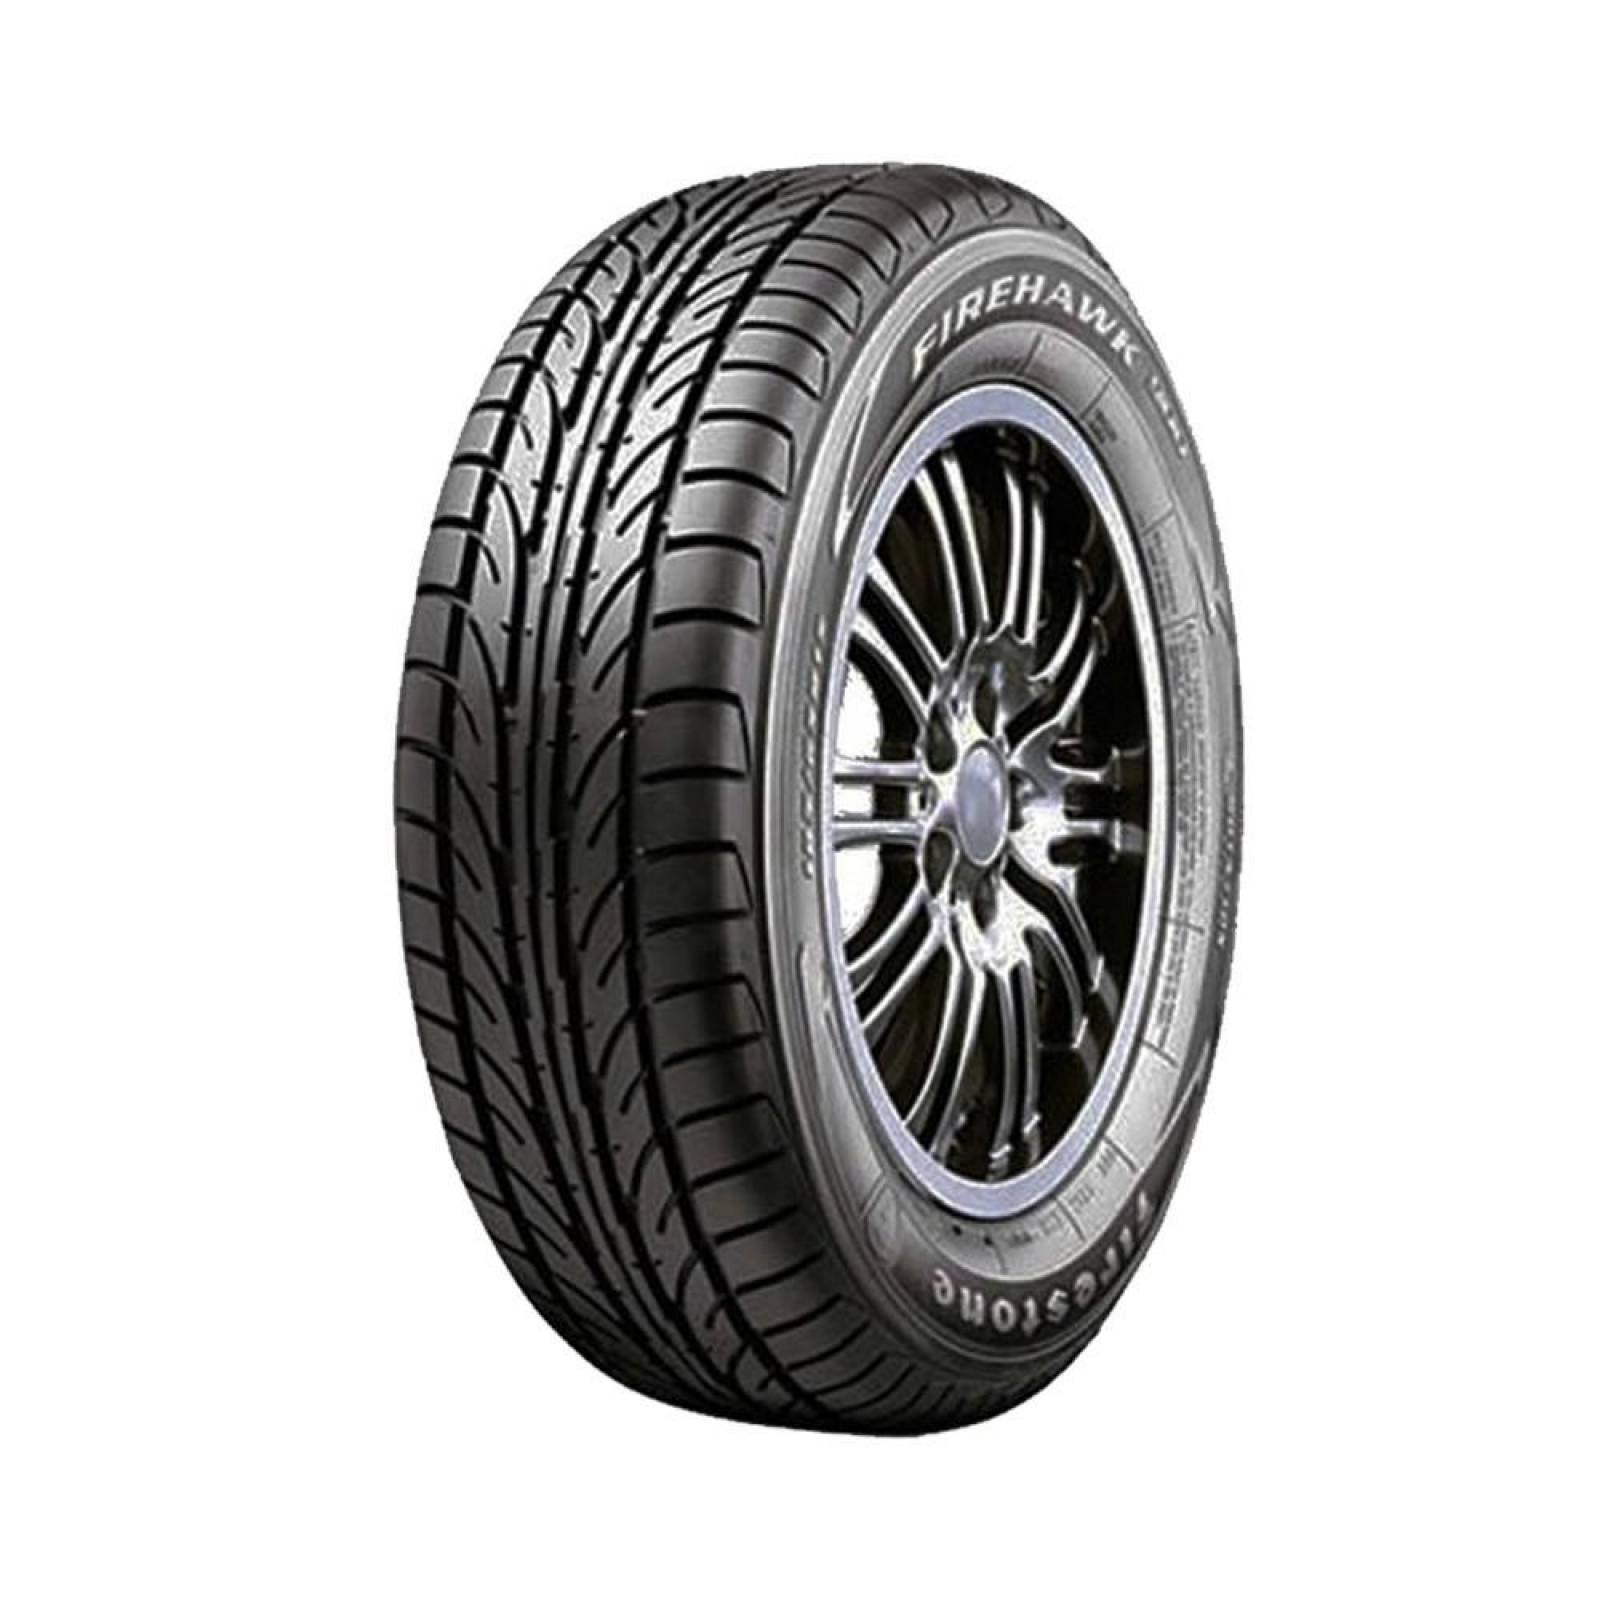 Neumáticos 225/45 R17